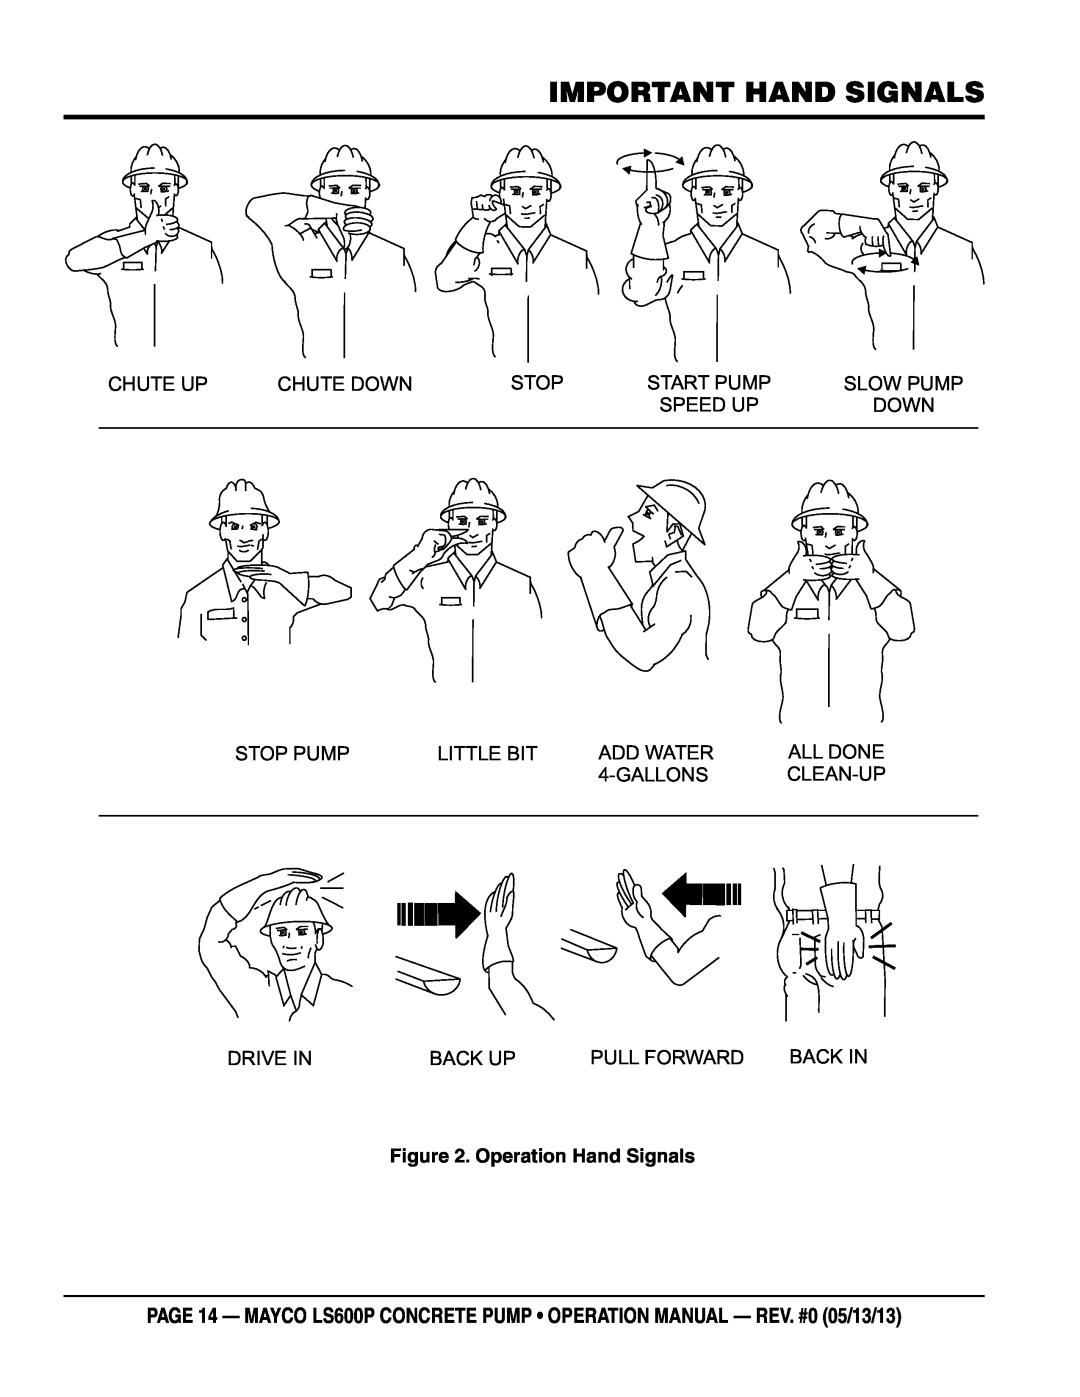 Multiquip LS600P operation manual important hand signals, Operation Hand Signals 